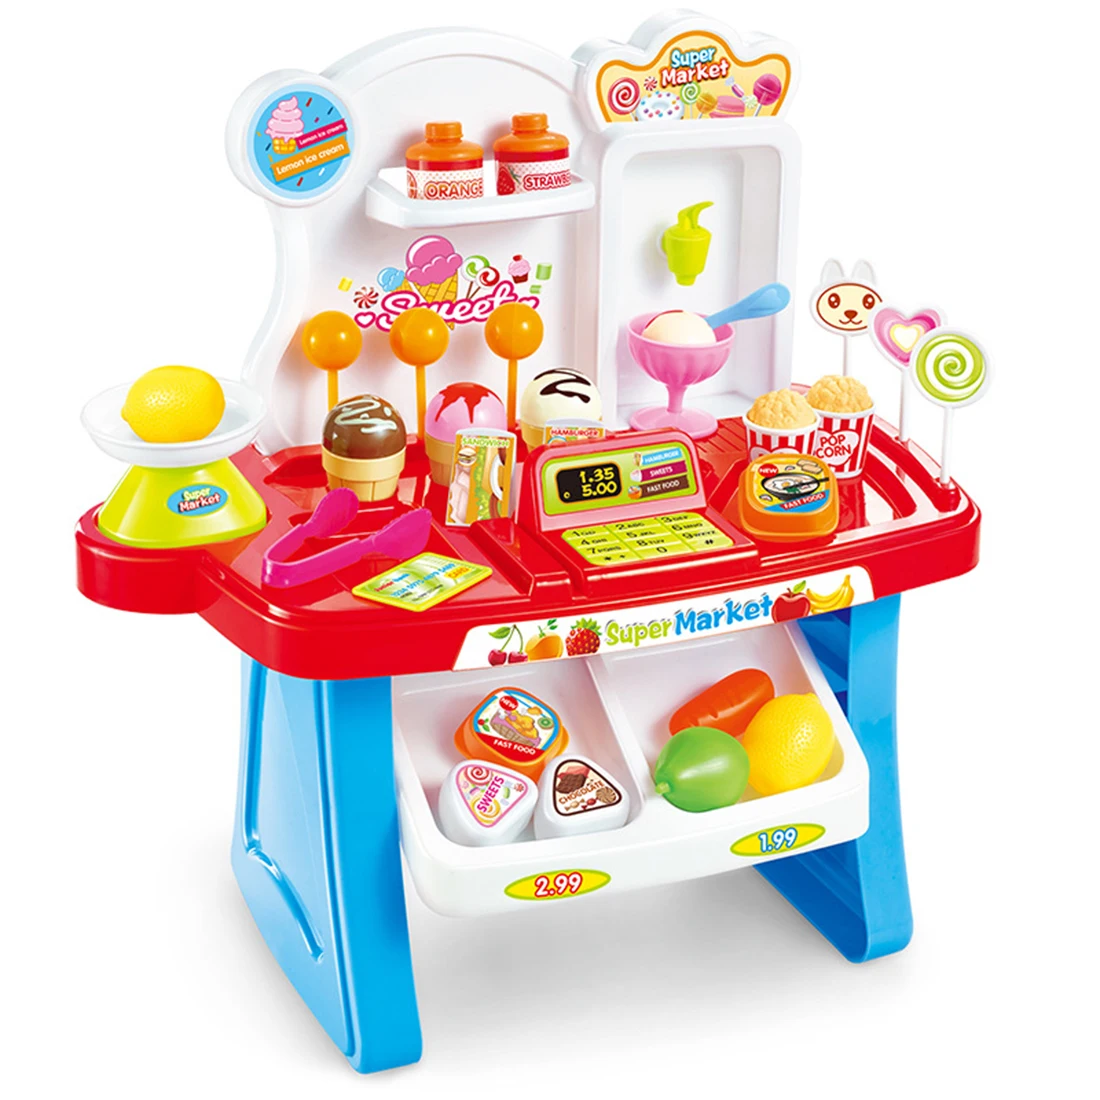 Mini Sweetshop Supermarket Stall Play Set Kids Cashier Till & Shop 668-23 